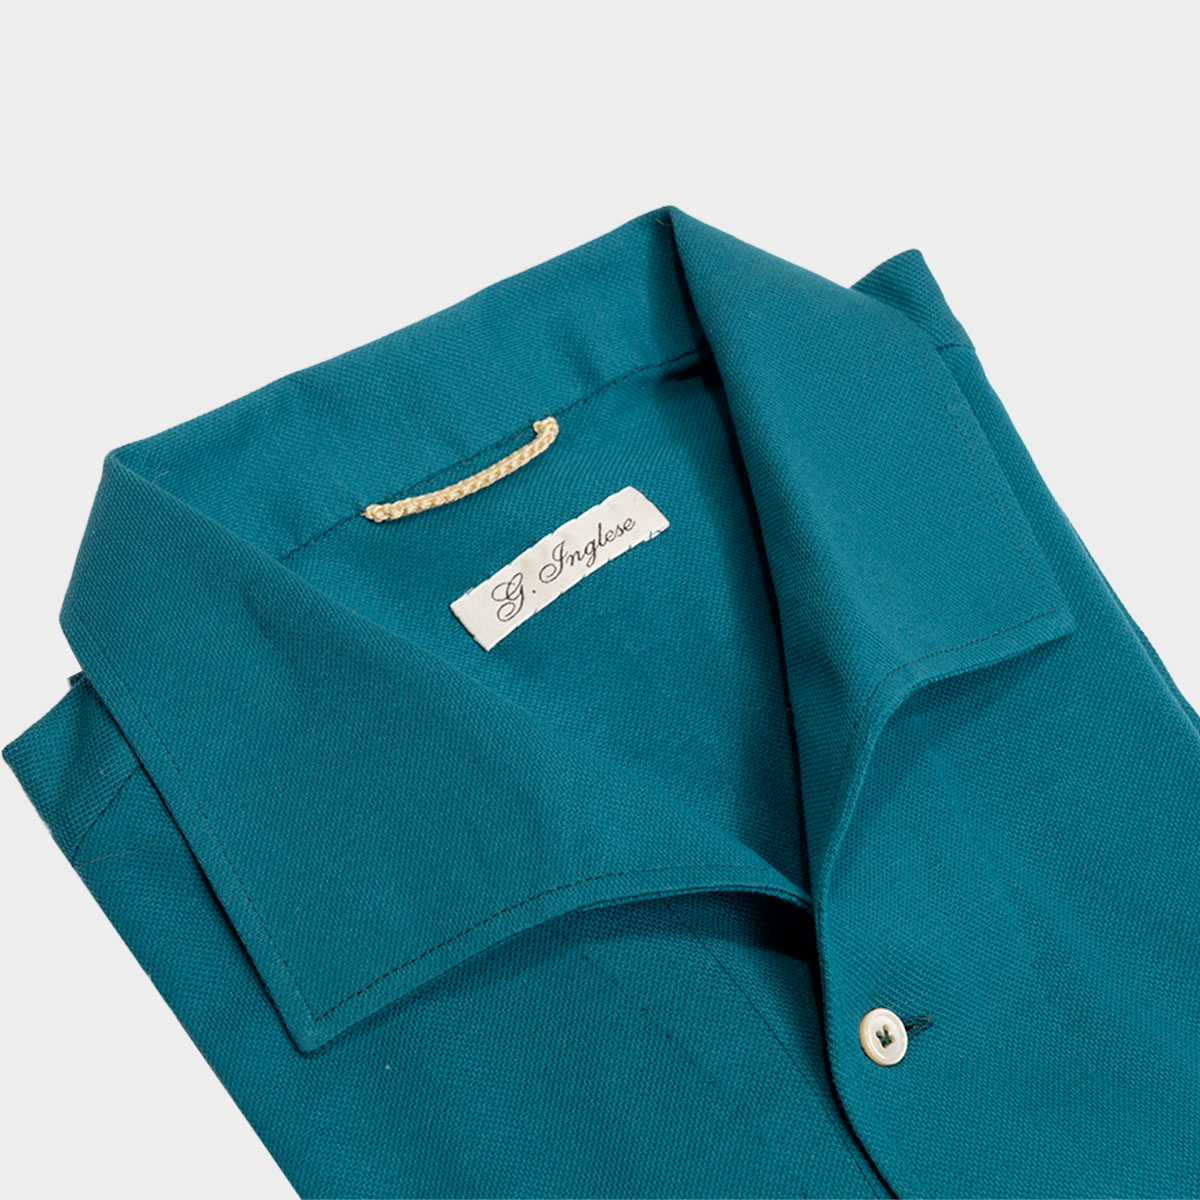 Miami Collar Piquet Polo Shirt in Green G. Inglese on sale 2022 2